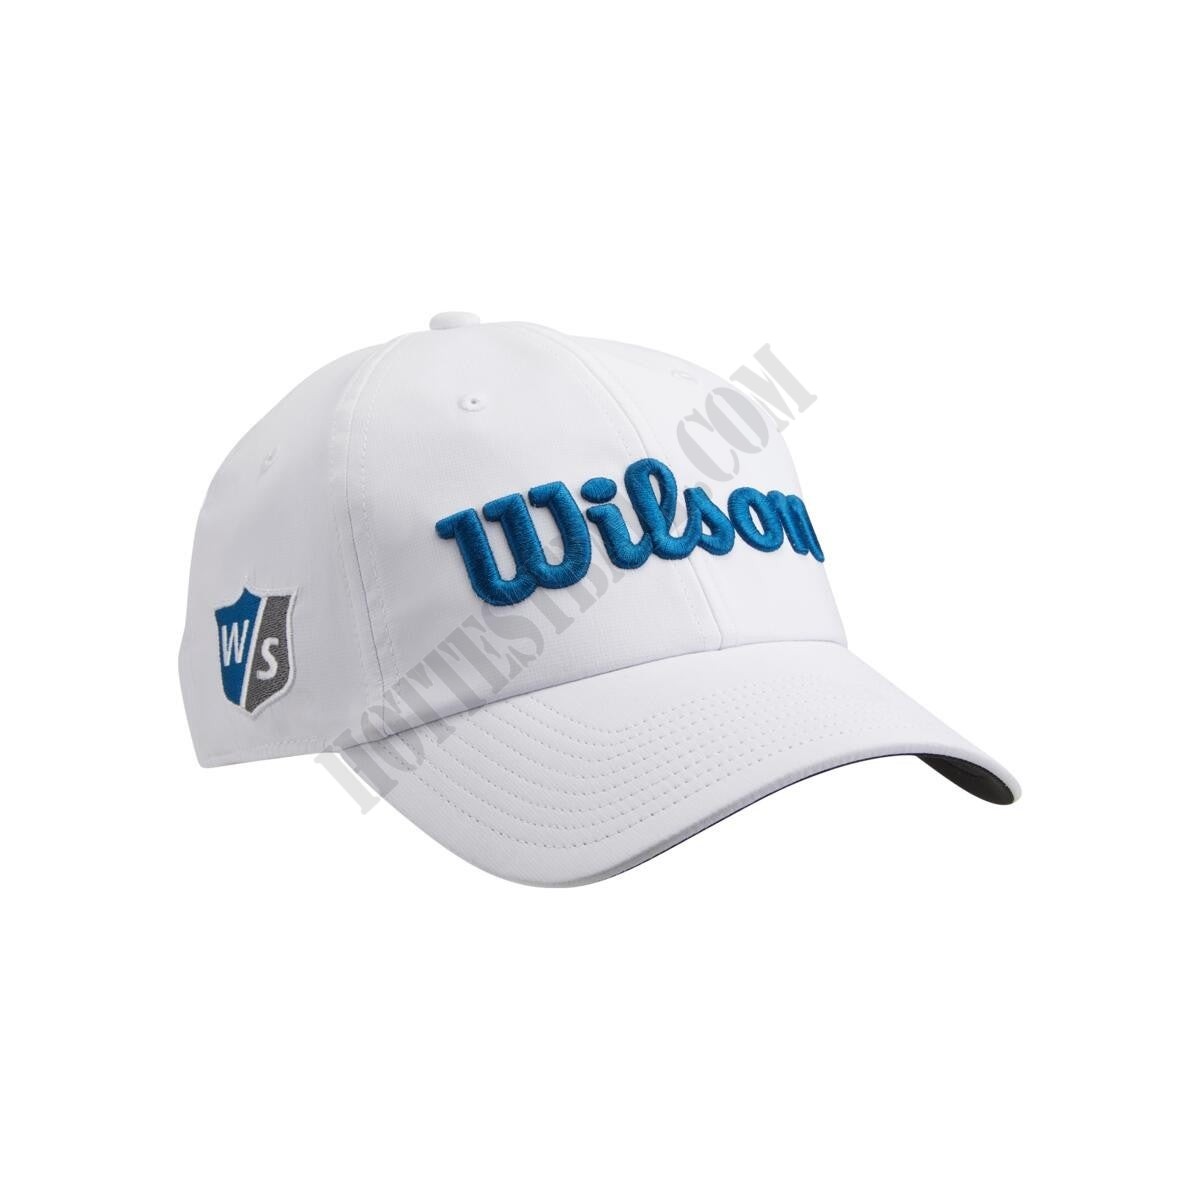 Wilson Pro Tour Hat - Wilson Discount Store - -1